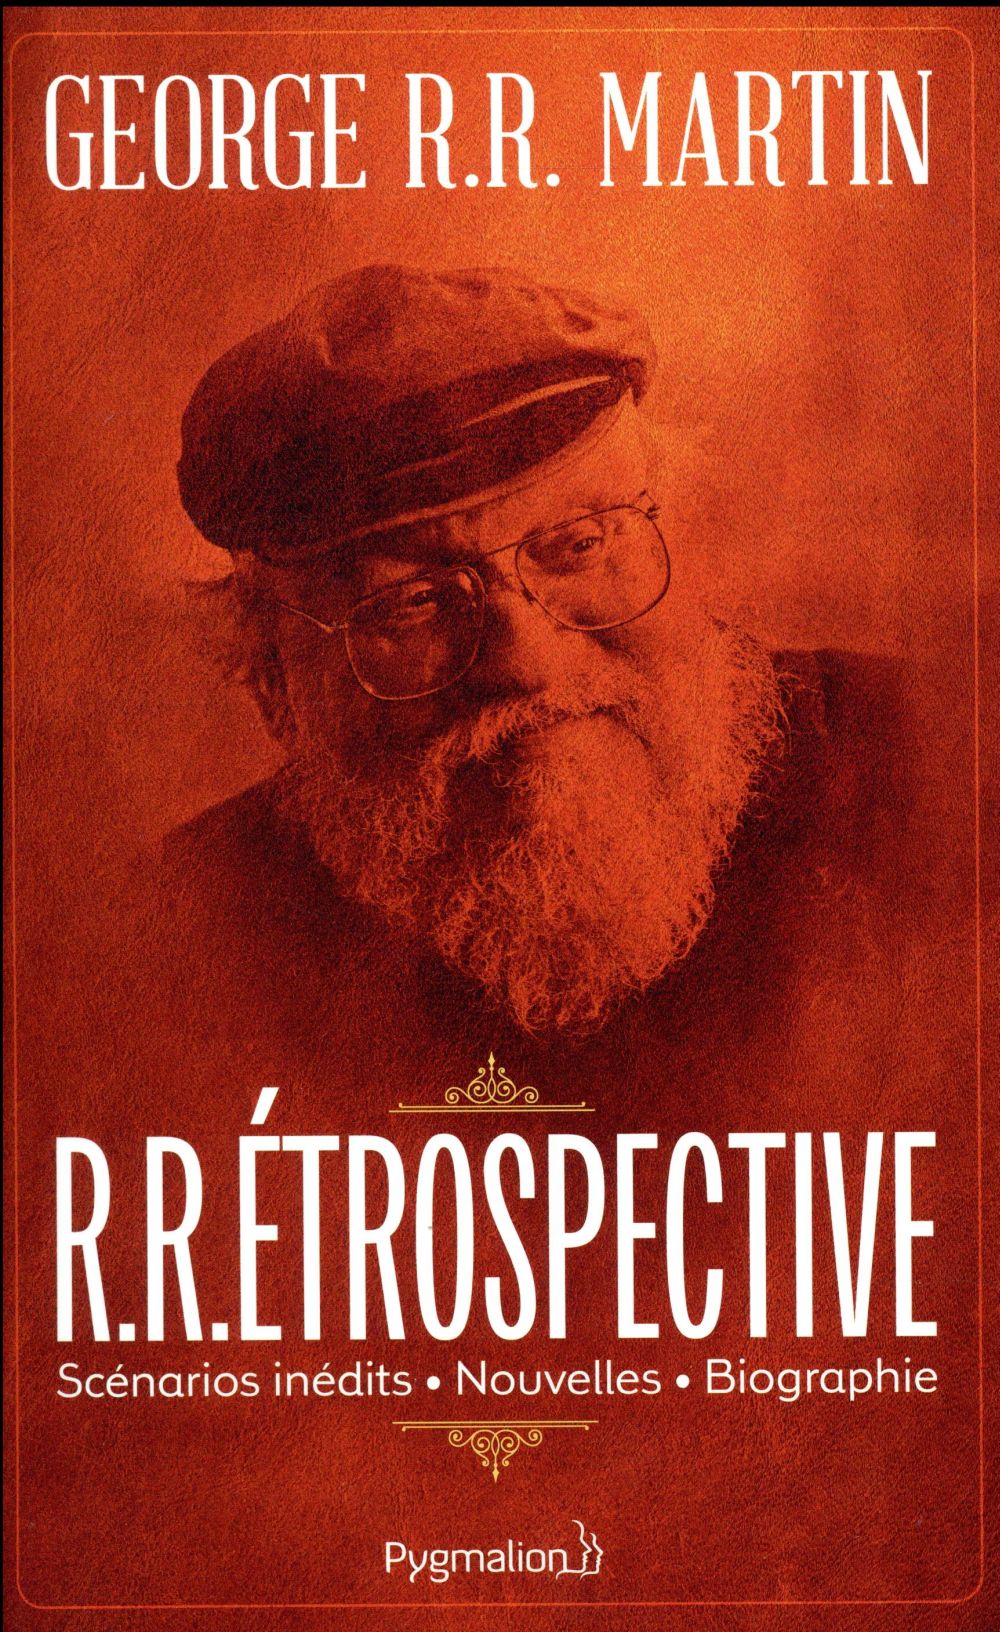 R.R.ETROSPECTIVE - SCENARIOS INEDITS, NOUVELLES, BIOGRAPHIE